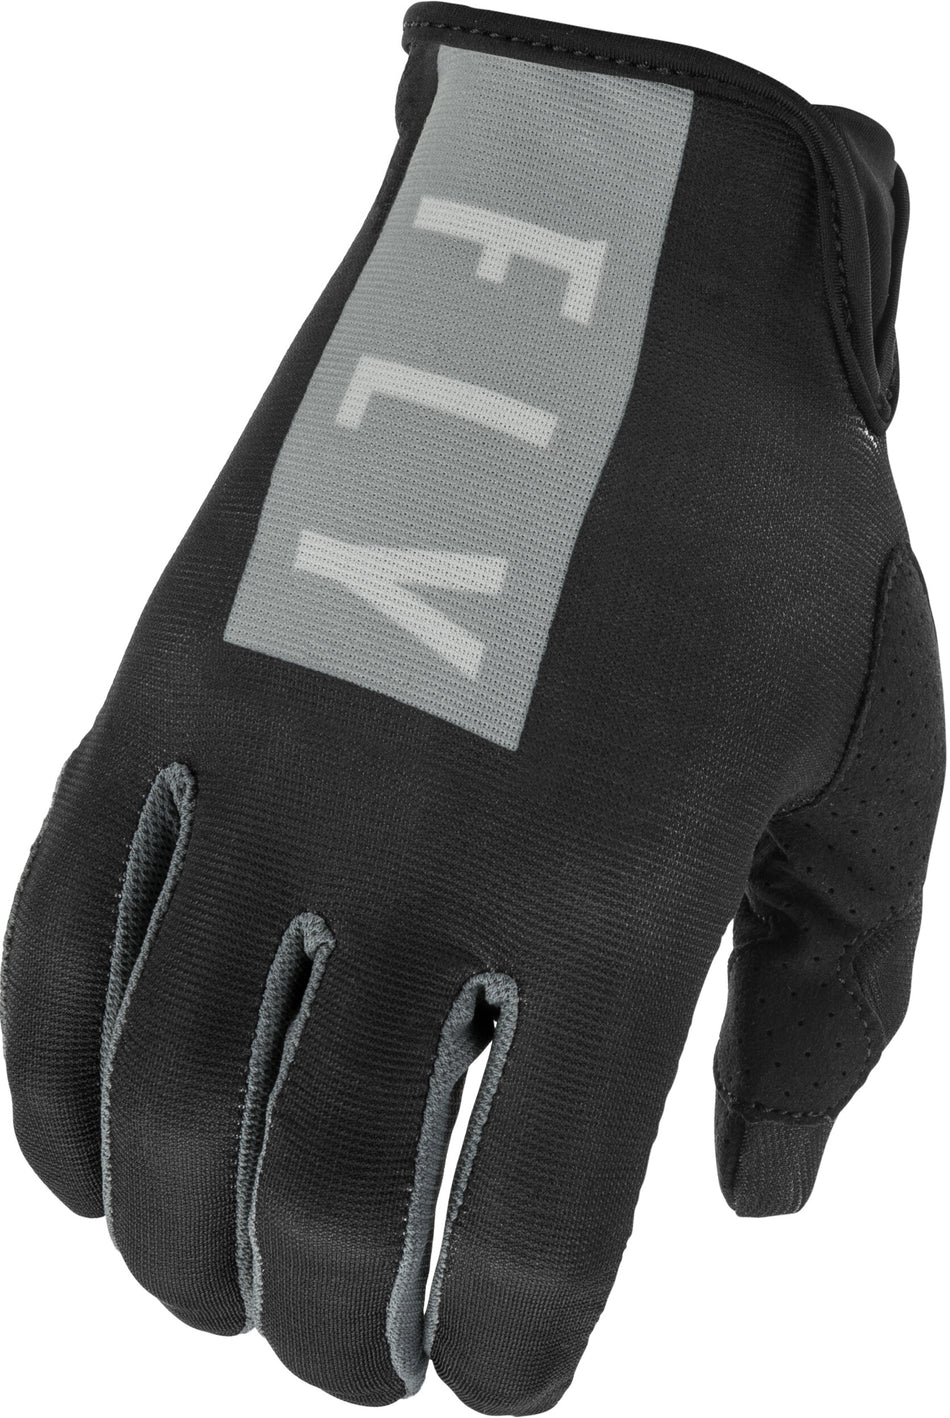 FLY RACING Women's Lite Gloves Black/Grey Sz 08 374-61008